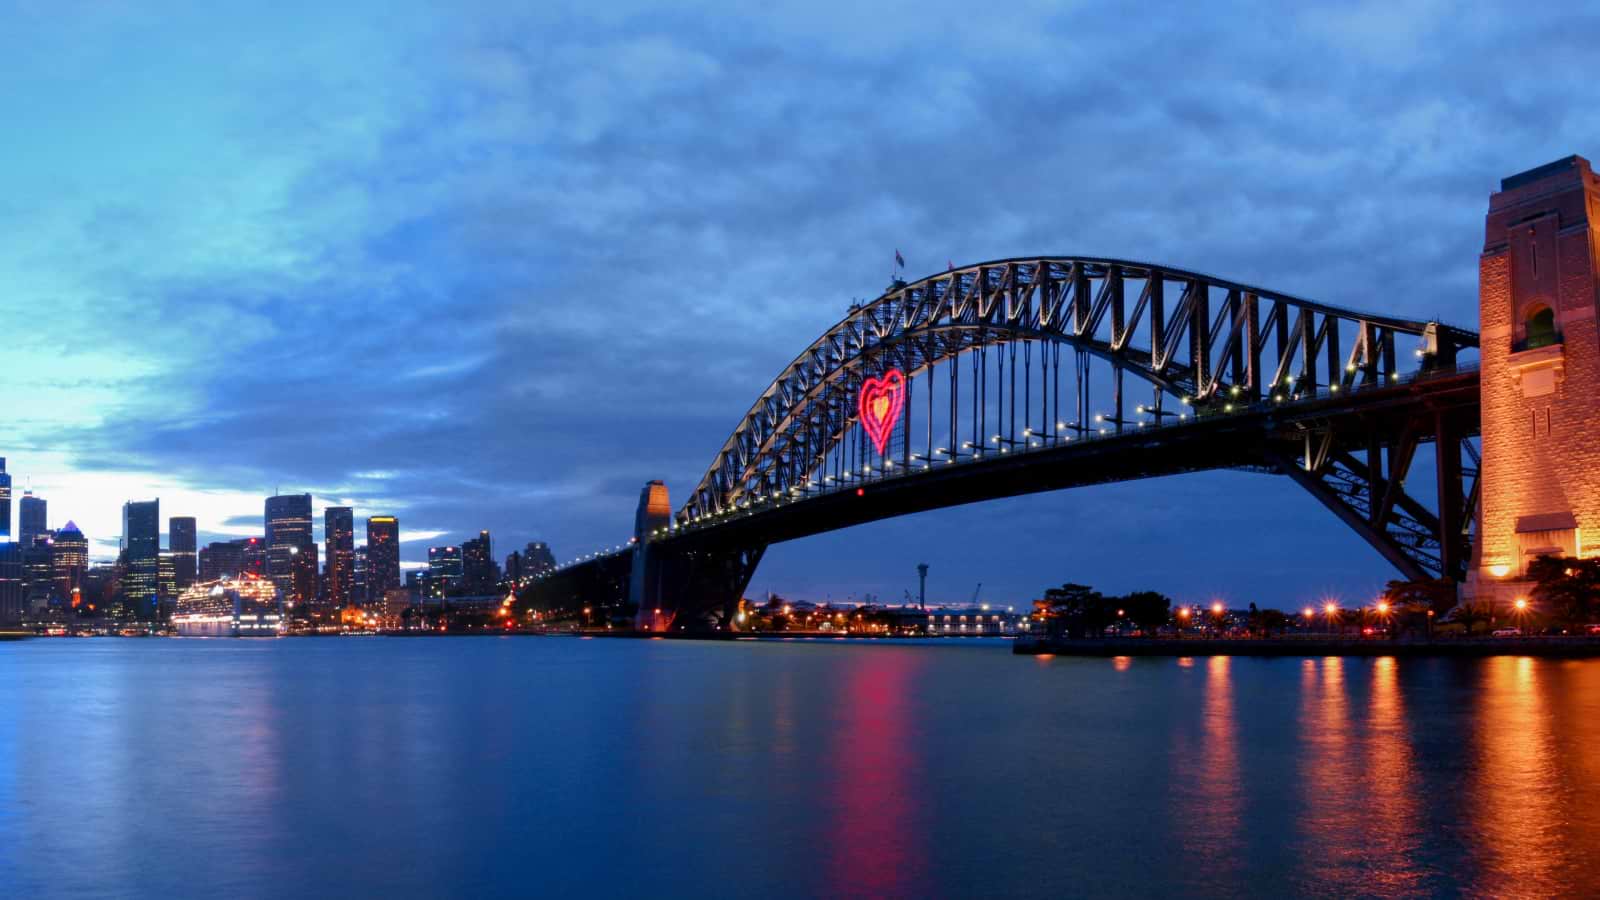 Melbourne Sydney and New Zealand - Sydney's Bridge at night